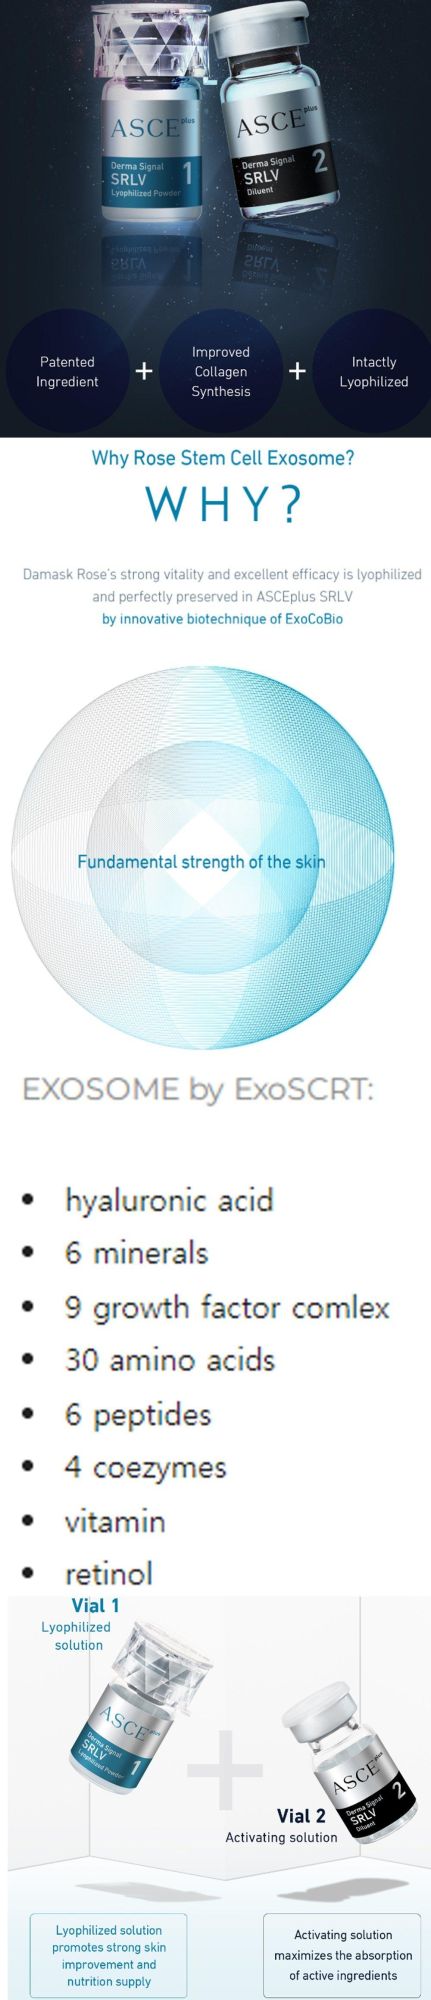 Asce Plus Exosome Dermal Signal Kit Srlv Skin Care Brighten Skin Cell Regeneration Anti-Aging